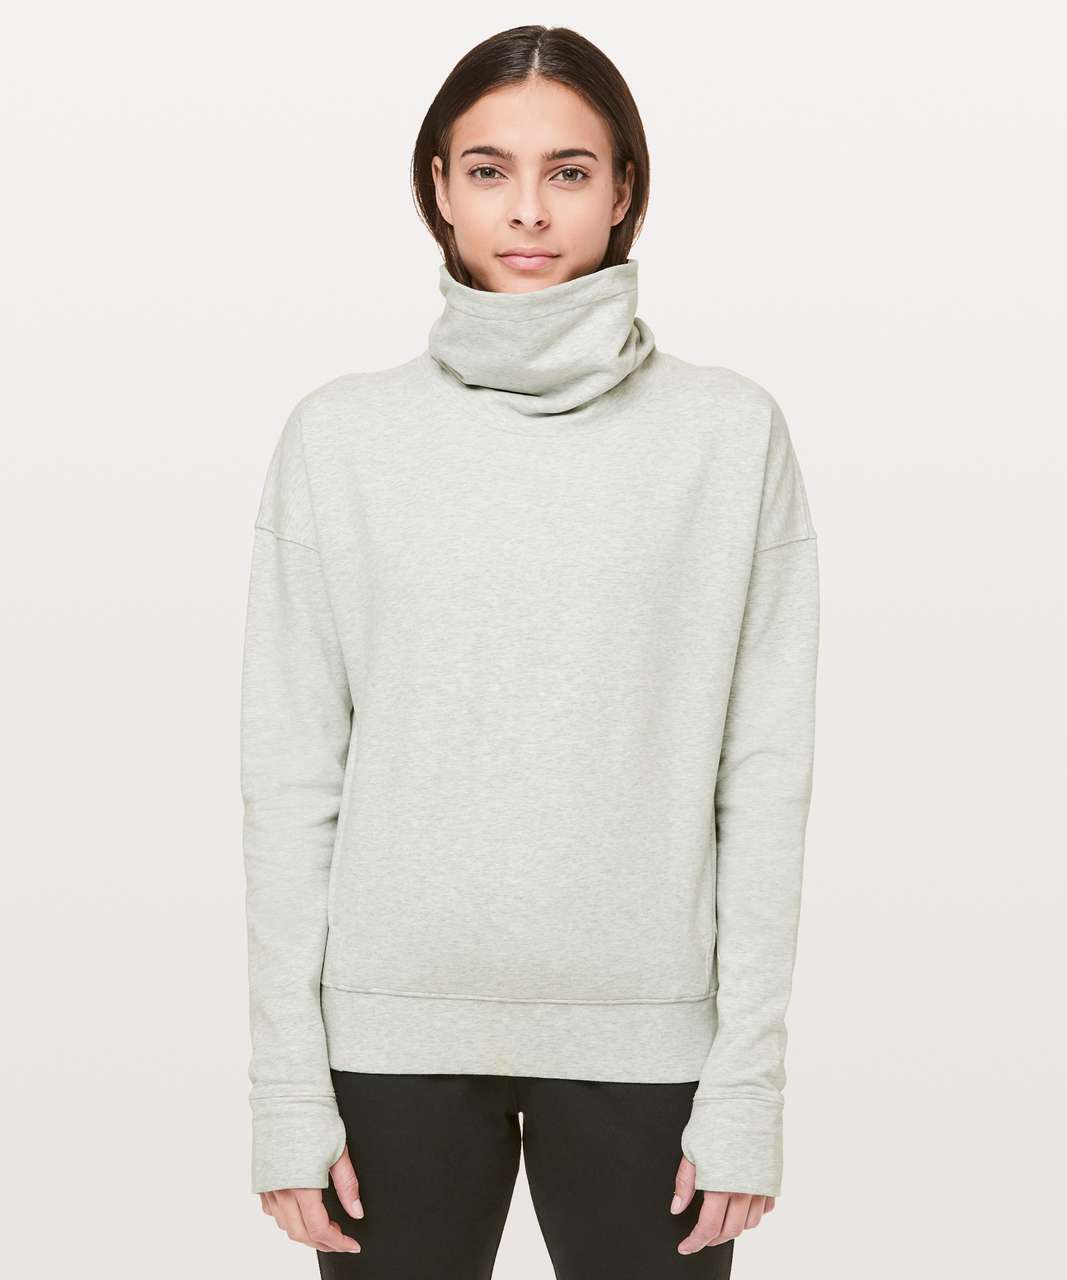 Lululemon Athletica Color Block Solid Gray Silver Sweatshirt Size 8 - 46%  off